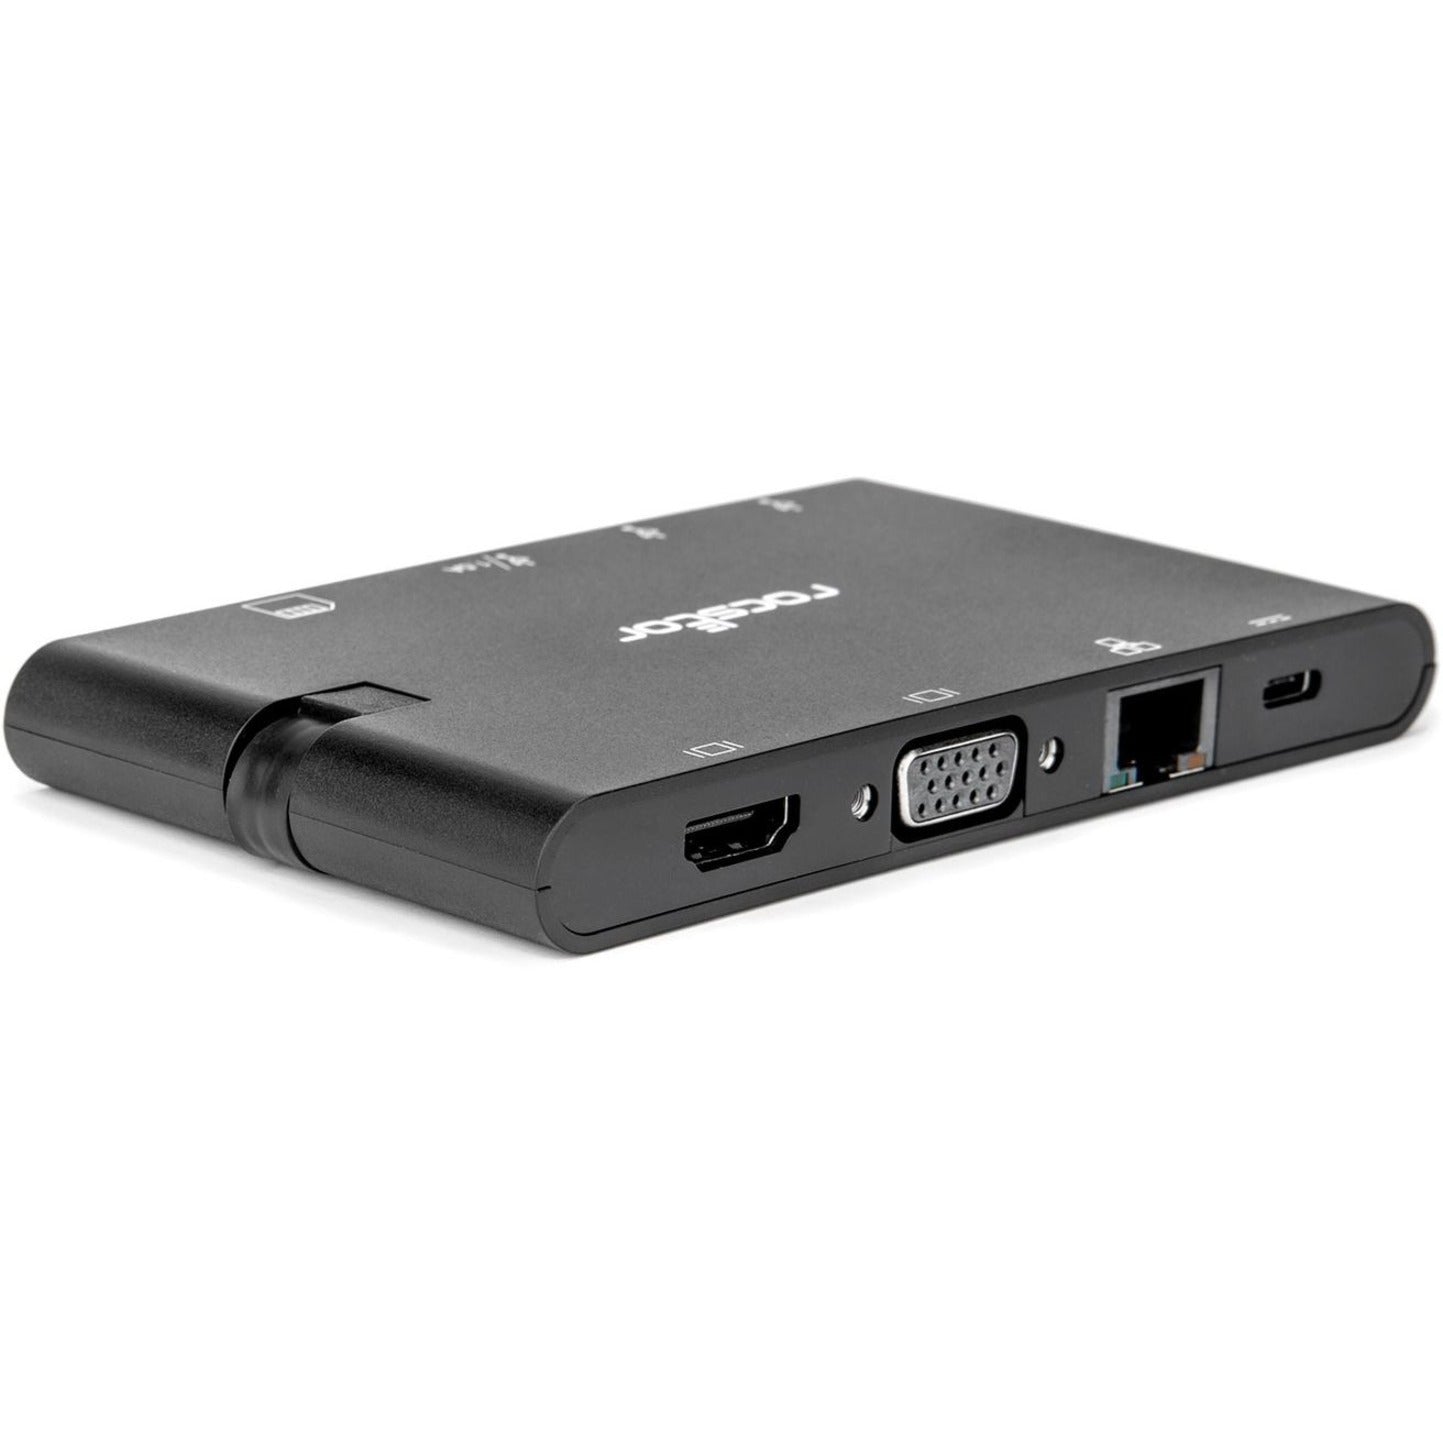 Rocstor Y10A263-B1 Tragbarer USB-C Multiport Adapter mit HDMI VGA USB 3.0 SD & MICRO SD